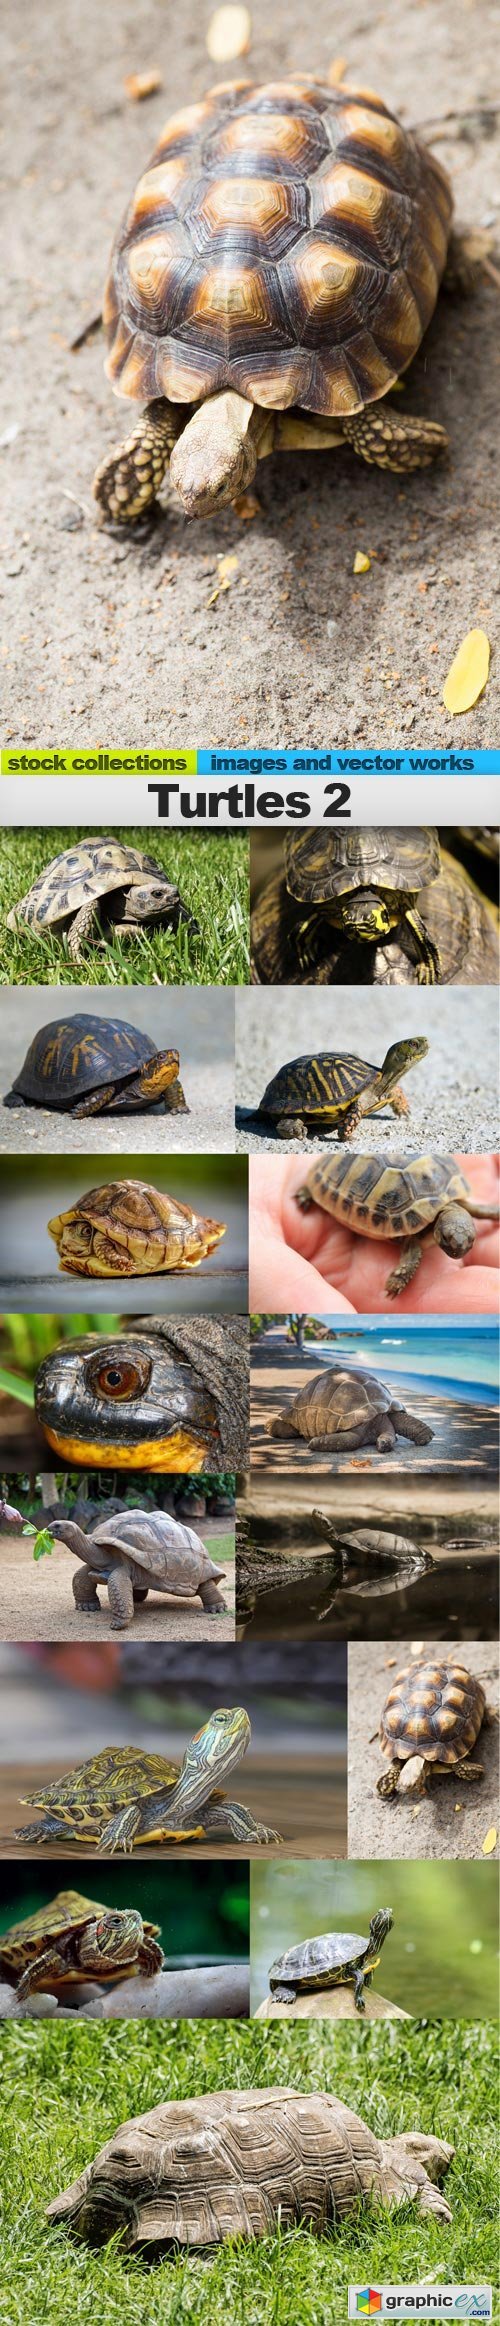 Turtles 2, 15 x UHQ JPEG